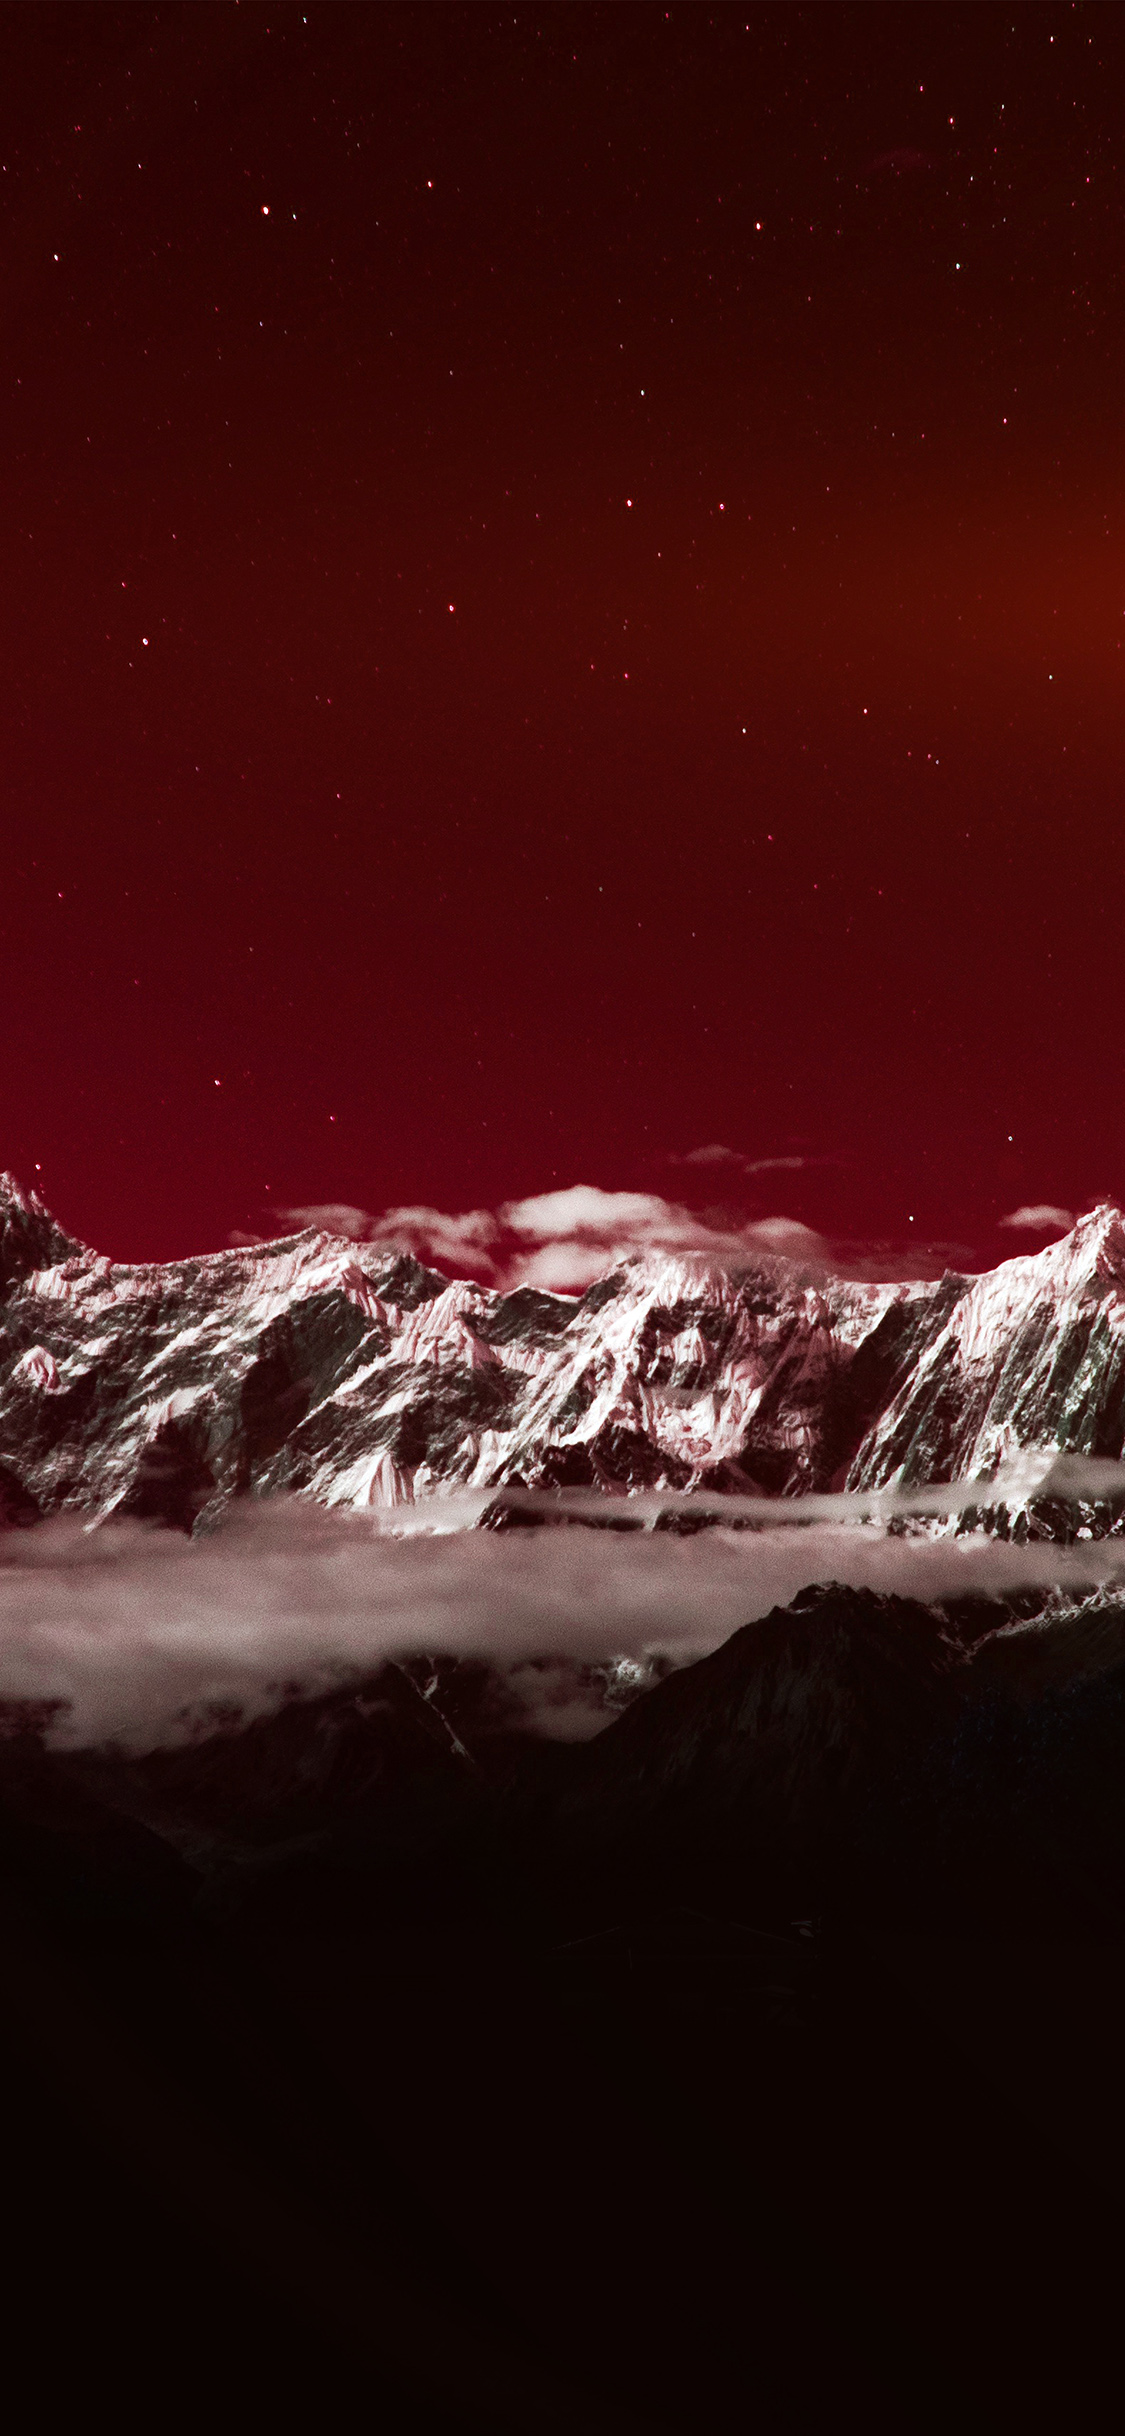 iPhone X wallpaper. mountain snow dark red winter sky star